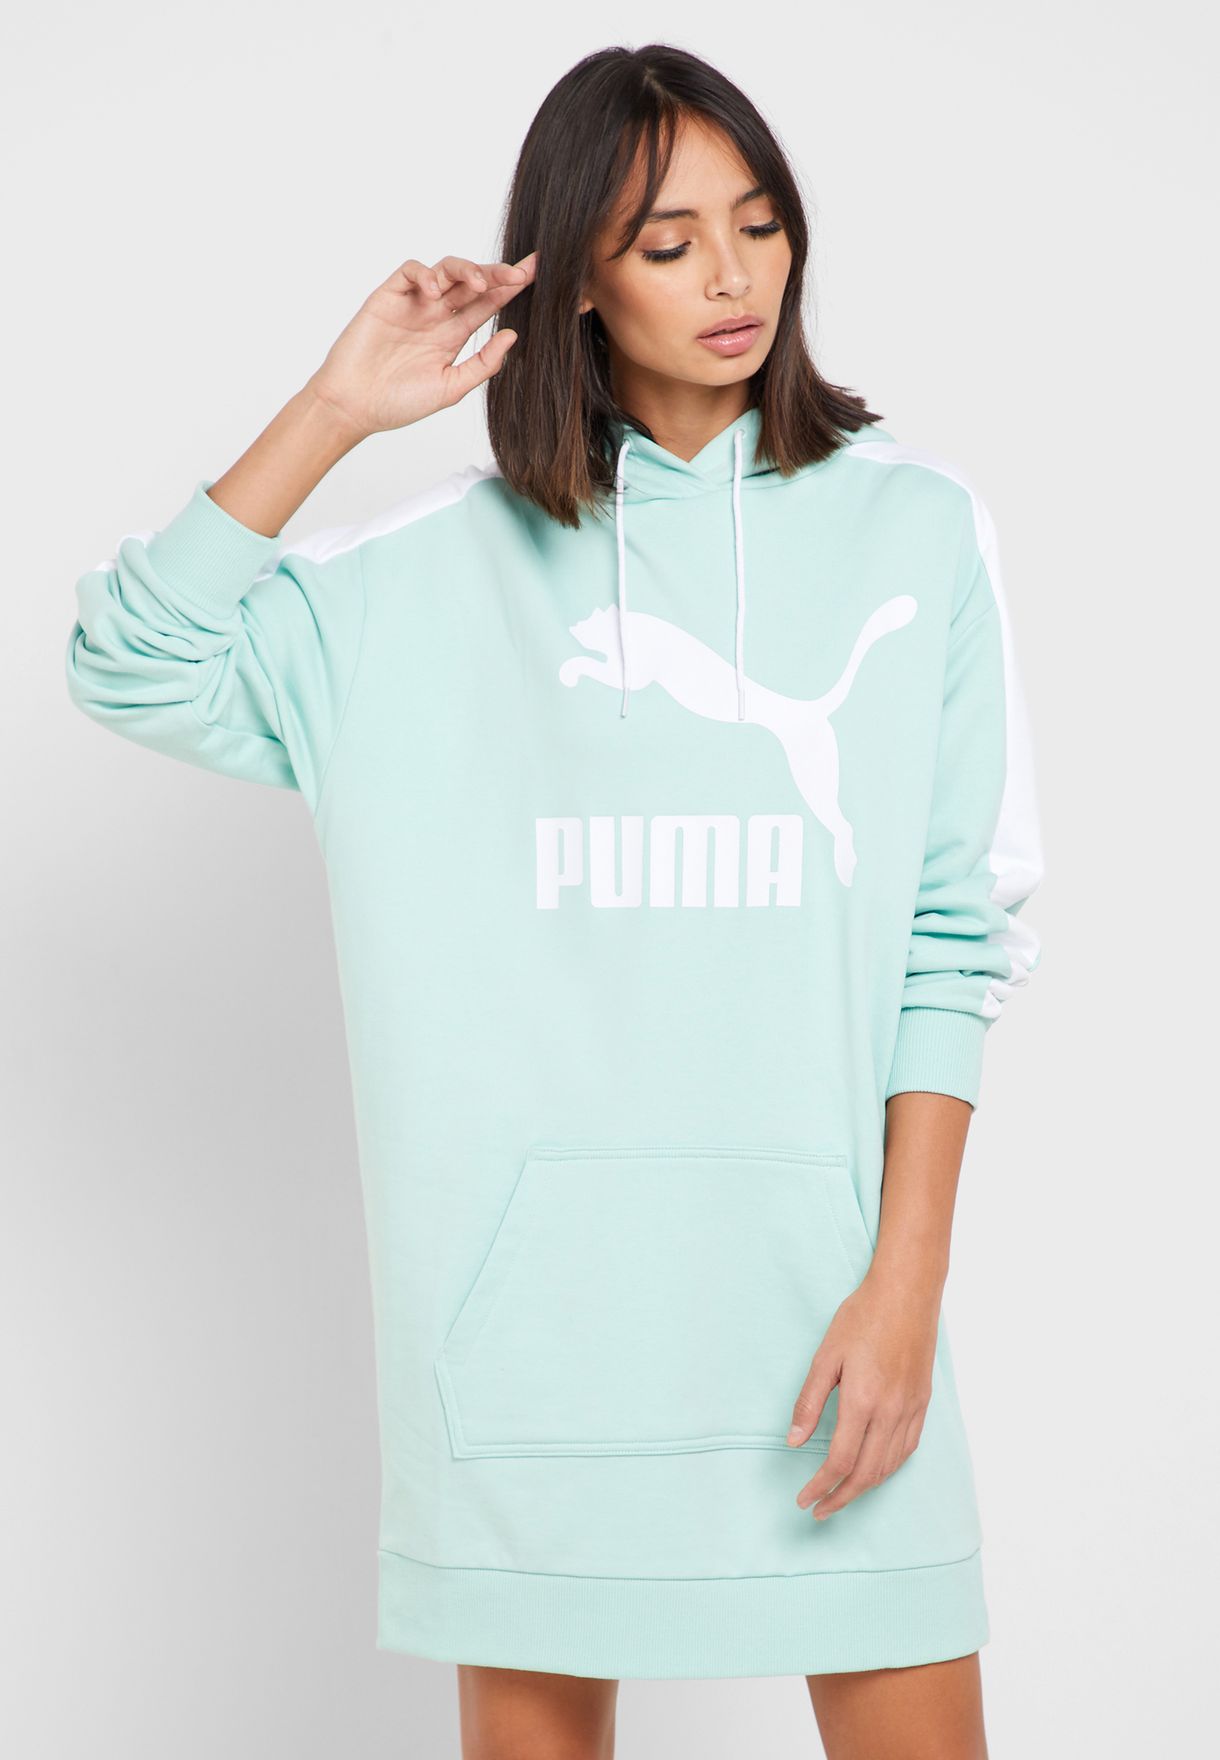 puma t7 hooded dress